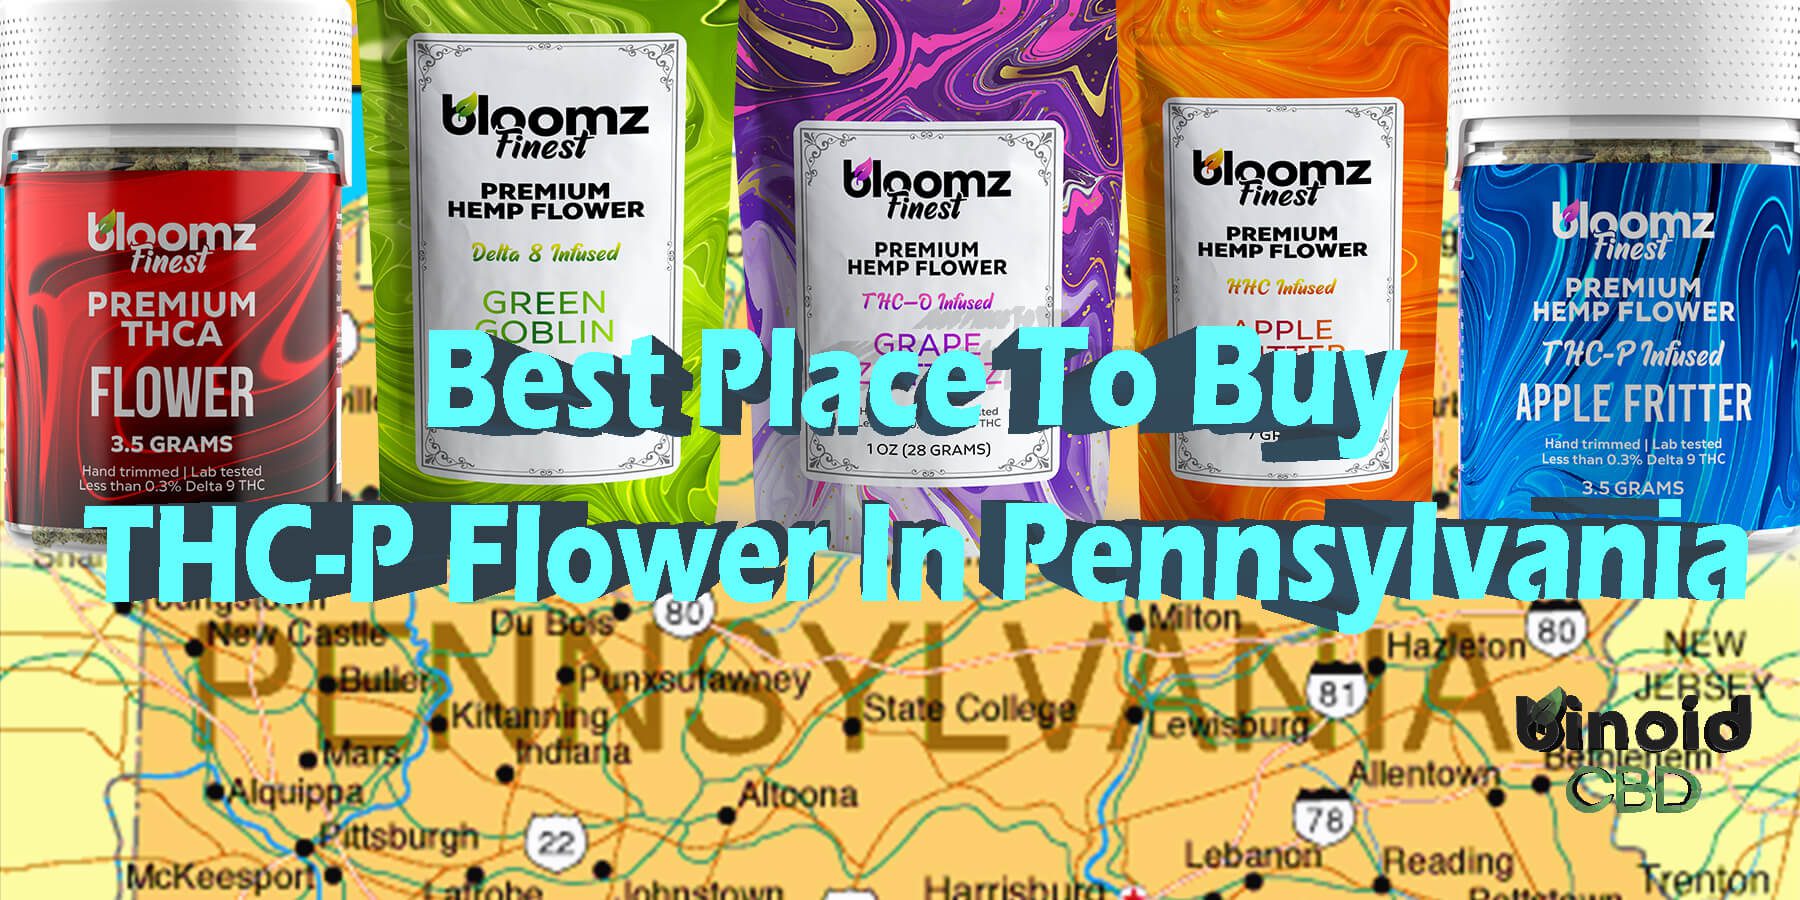 Buy THCP Flower Pennsylvania Get Online Near Me For Sale Best Brand Strongest Real Legal Store Shop Reddit